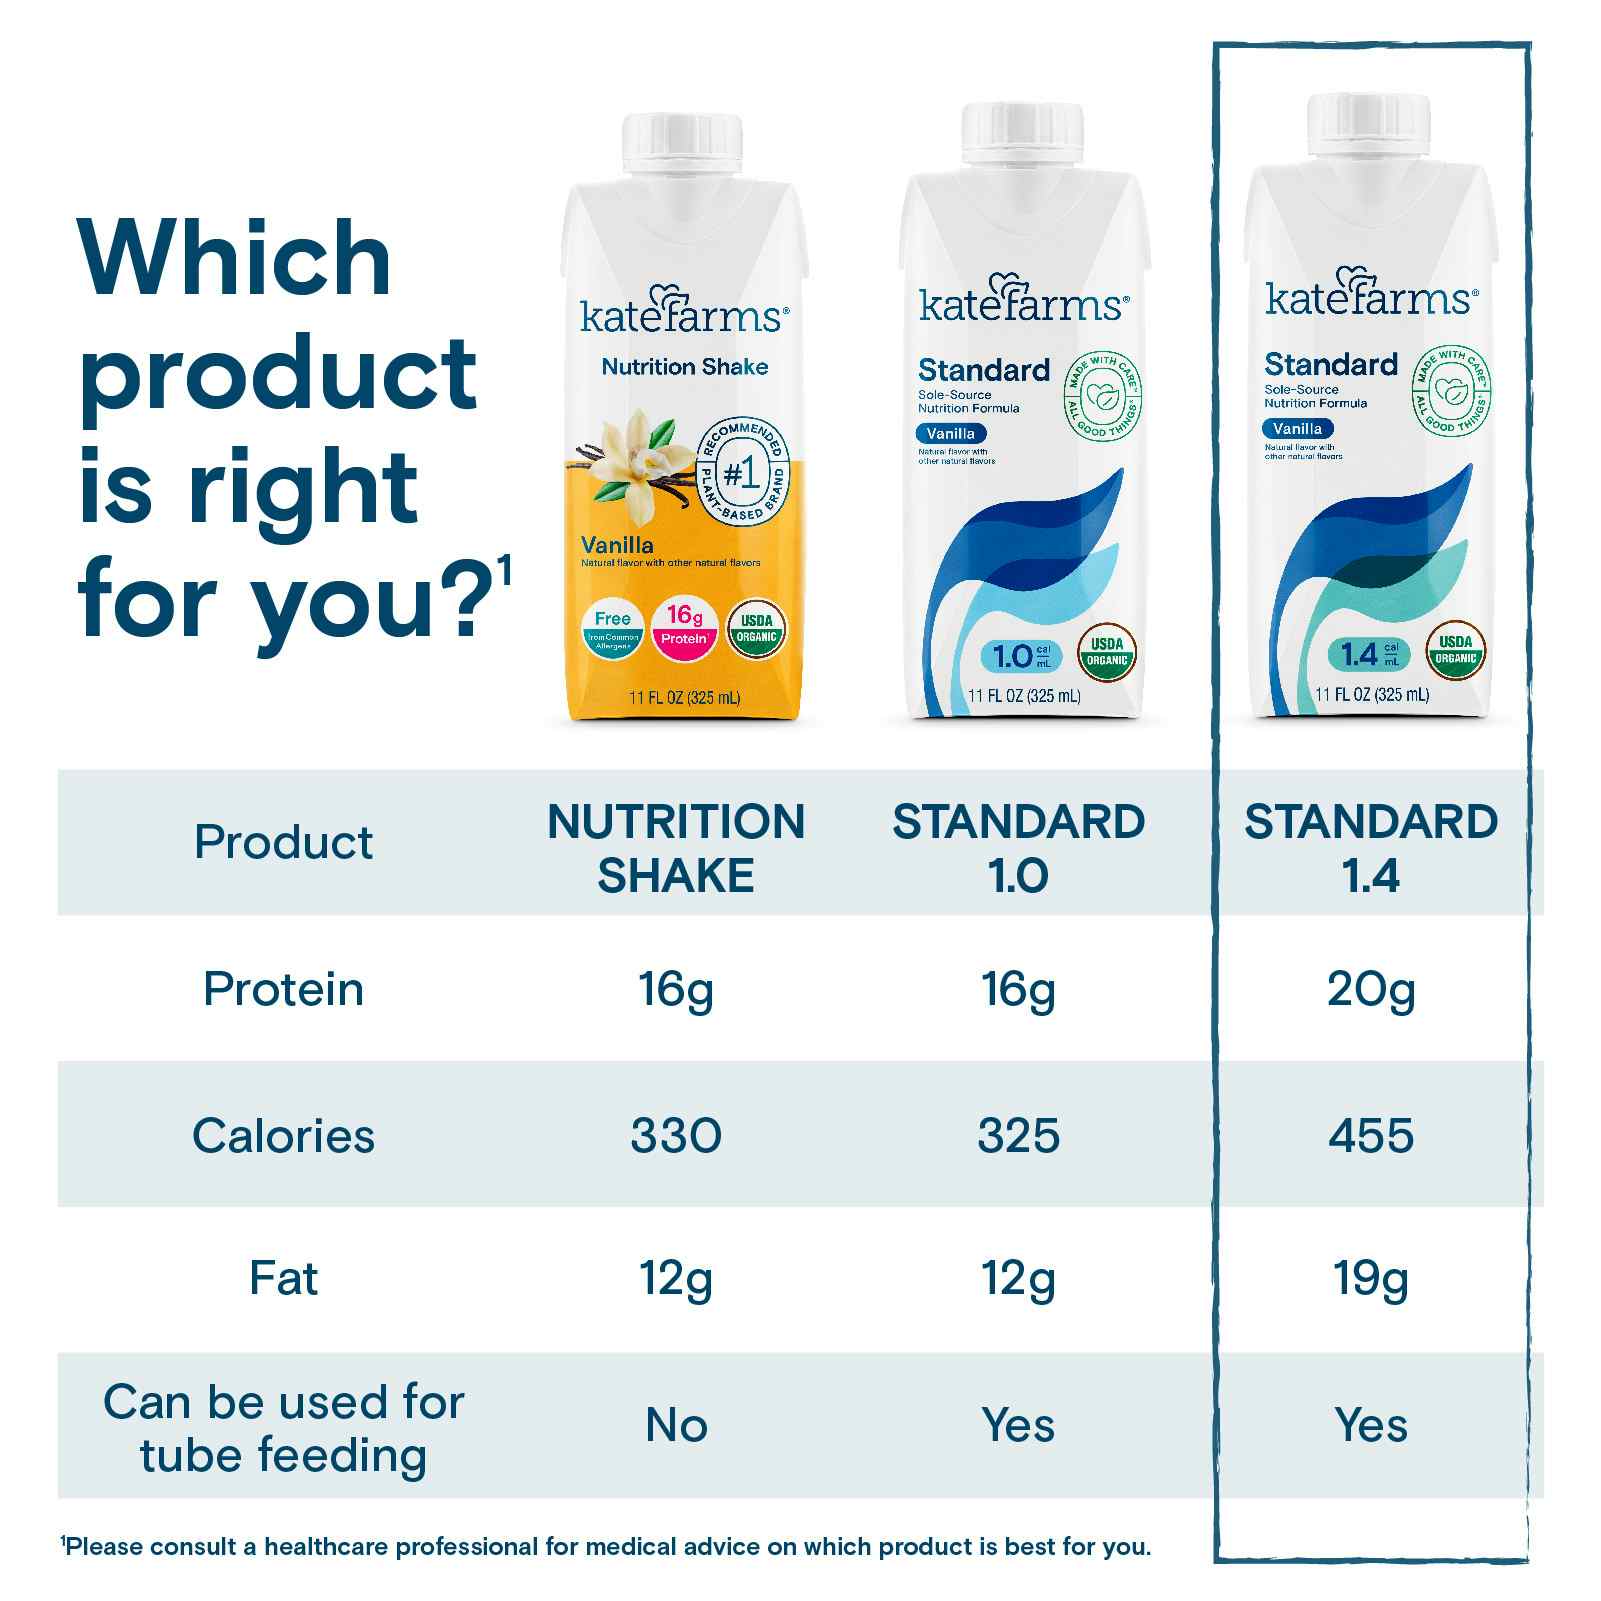 Kate Farms Standard 1.4 Sole-Source Nutrition Formula